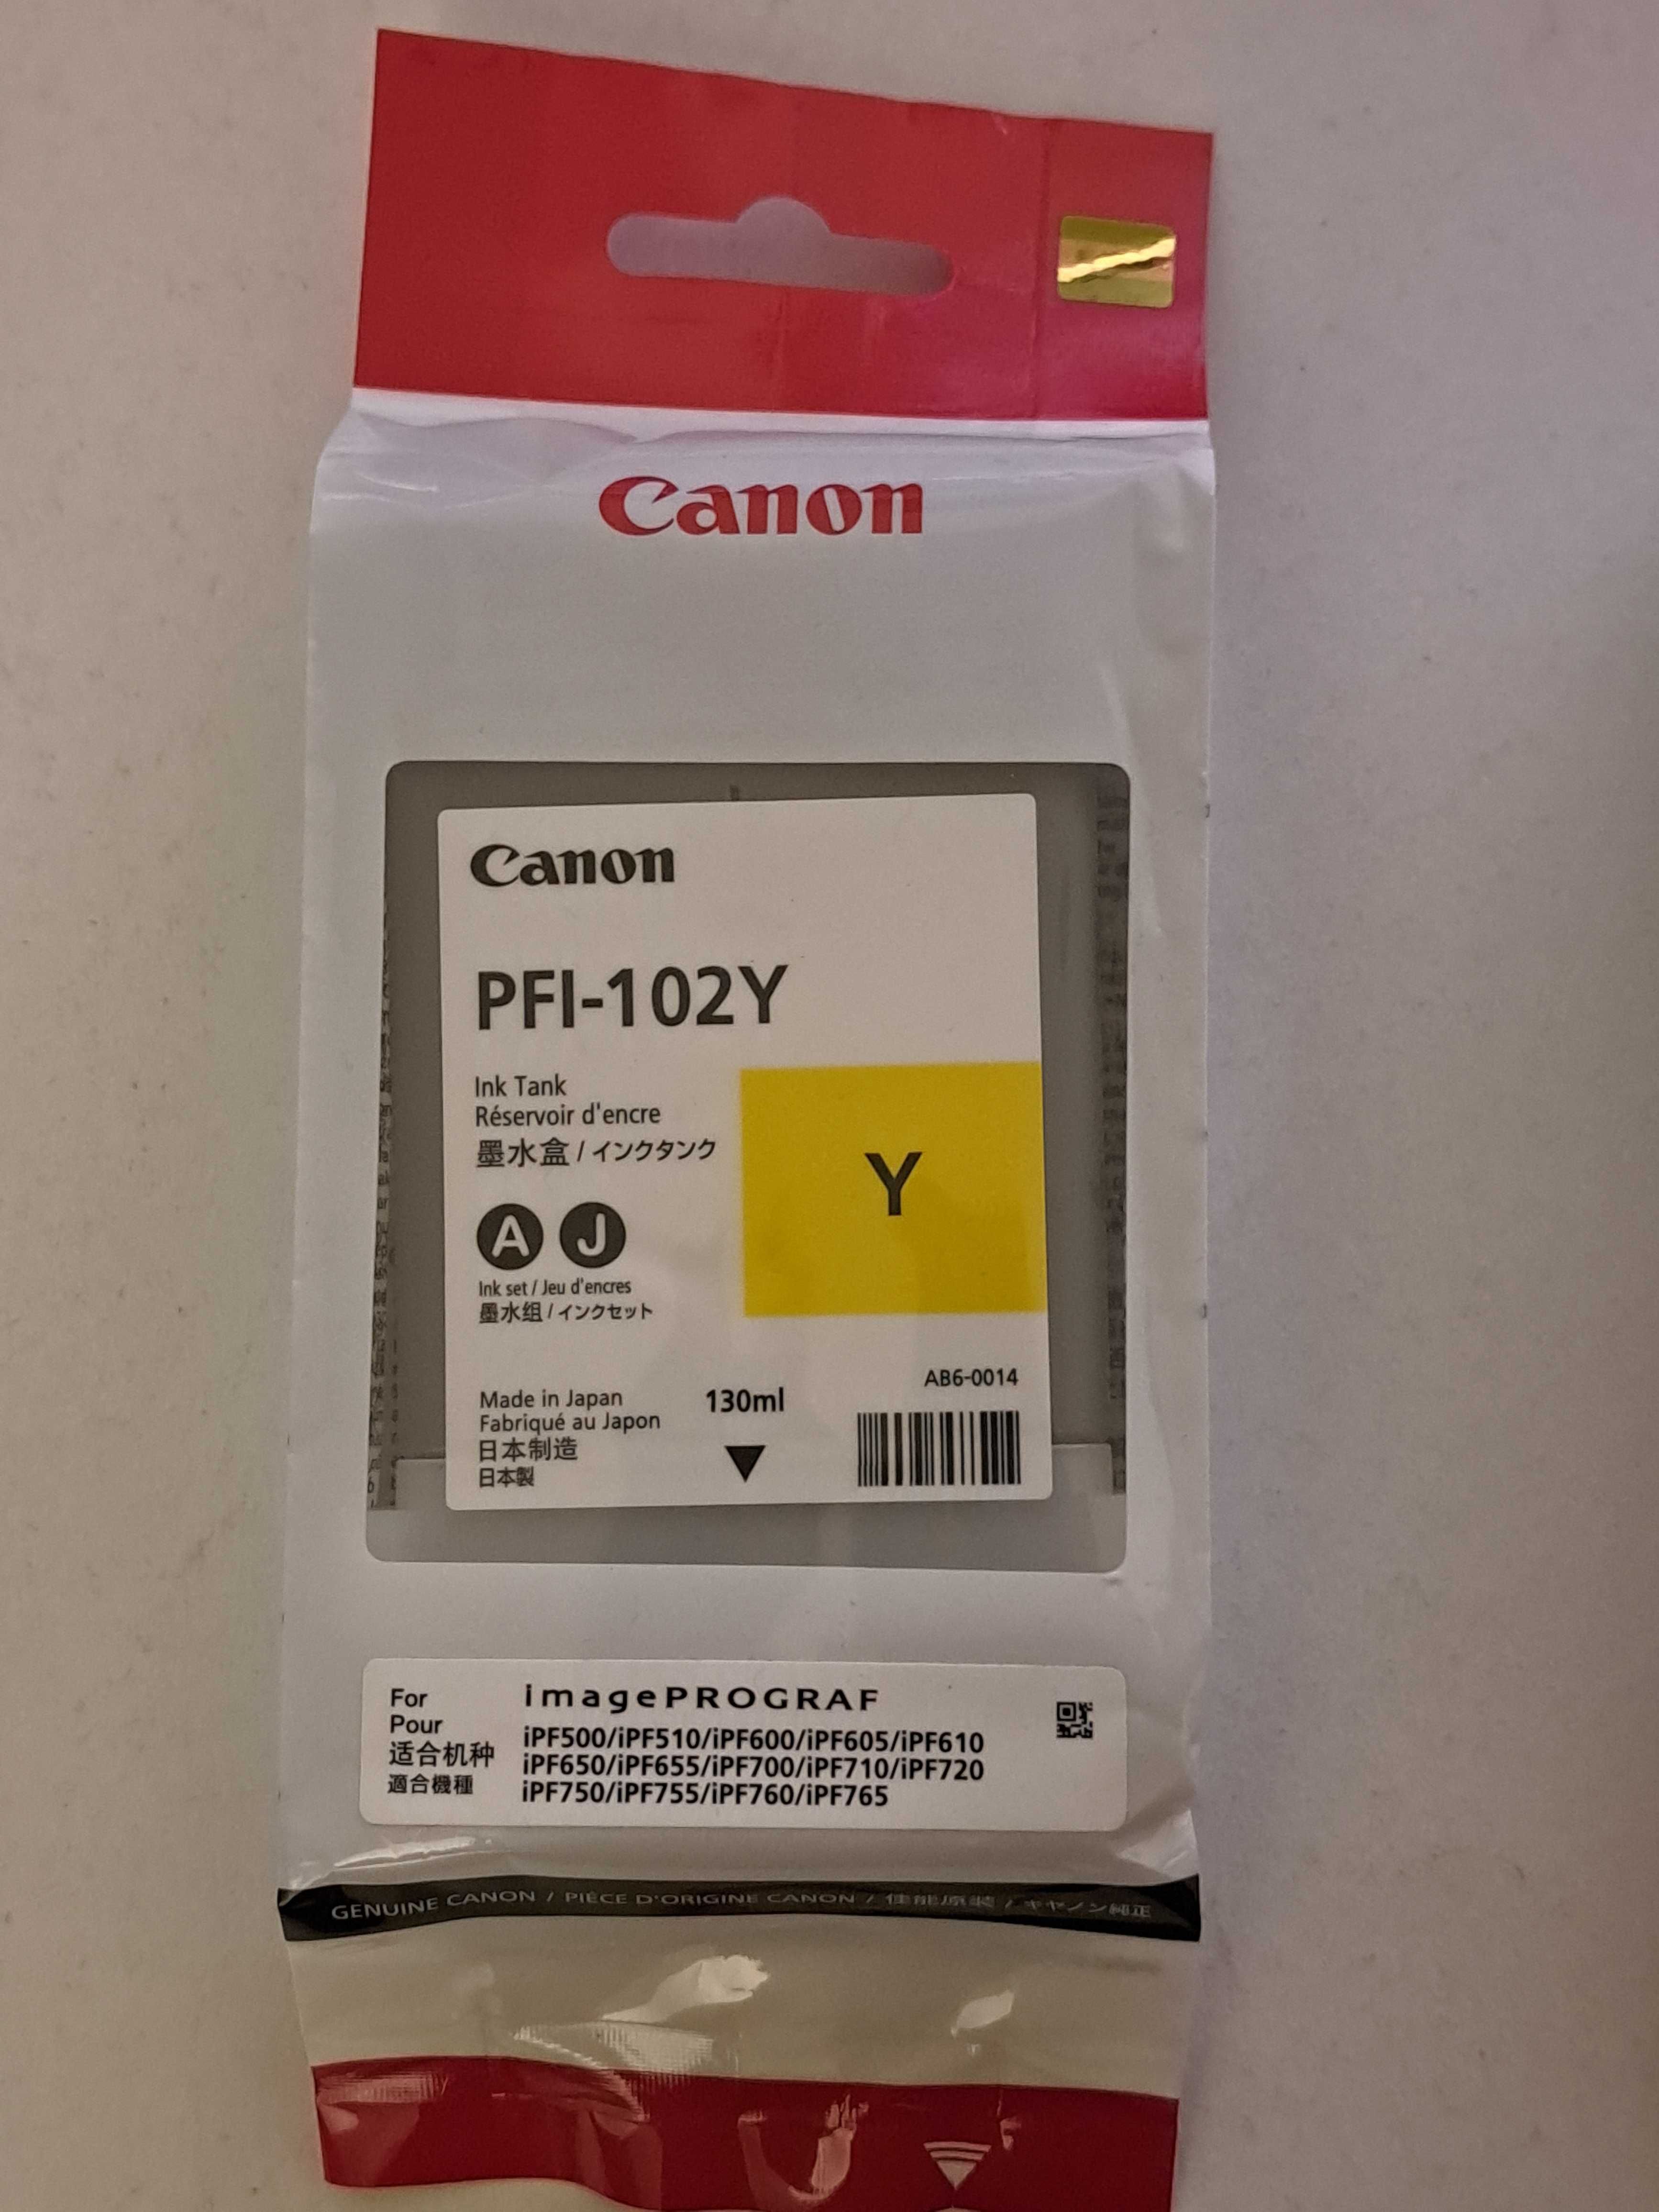 Tusz Canon PFI-102BK oryginalny